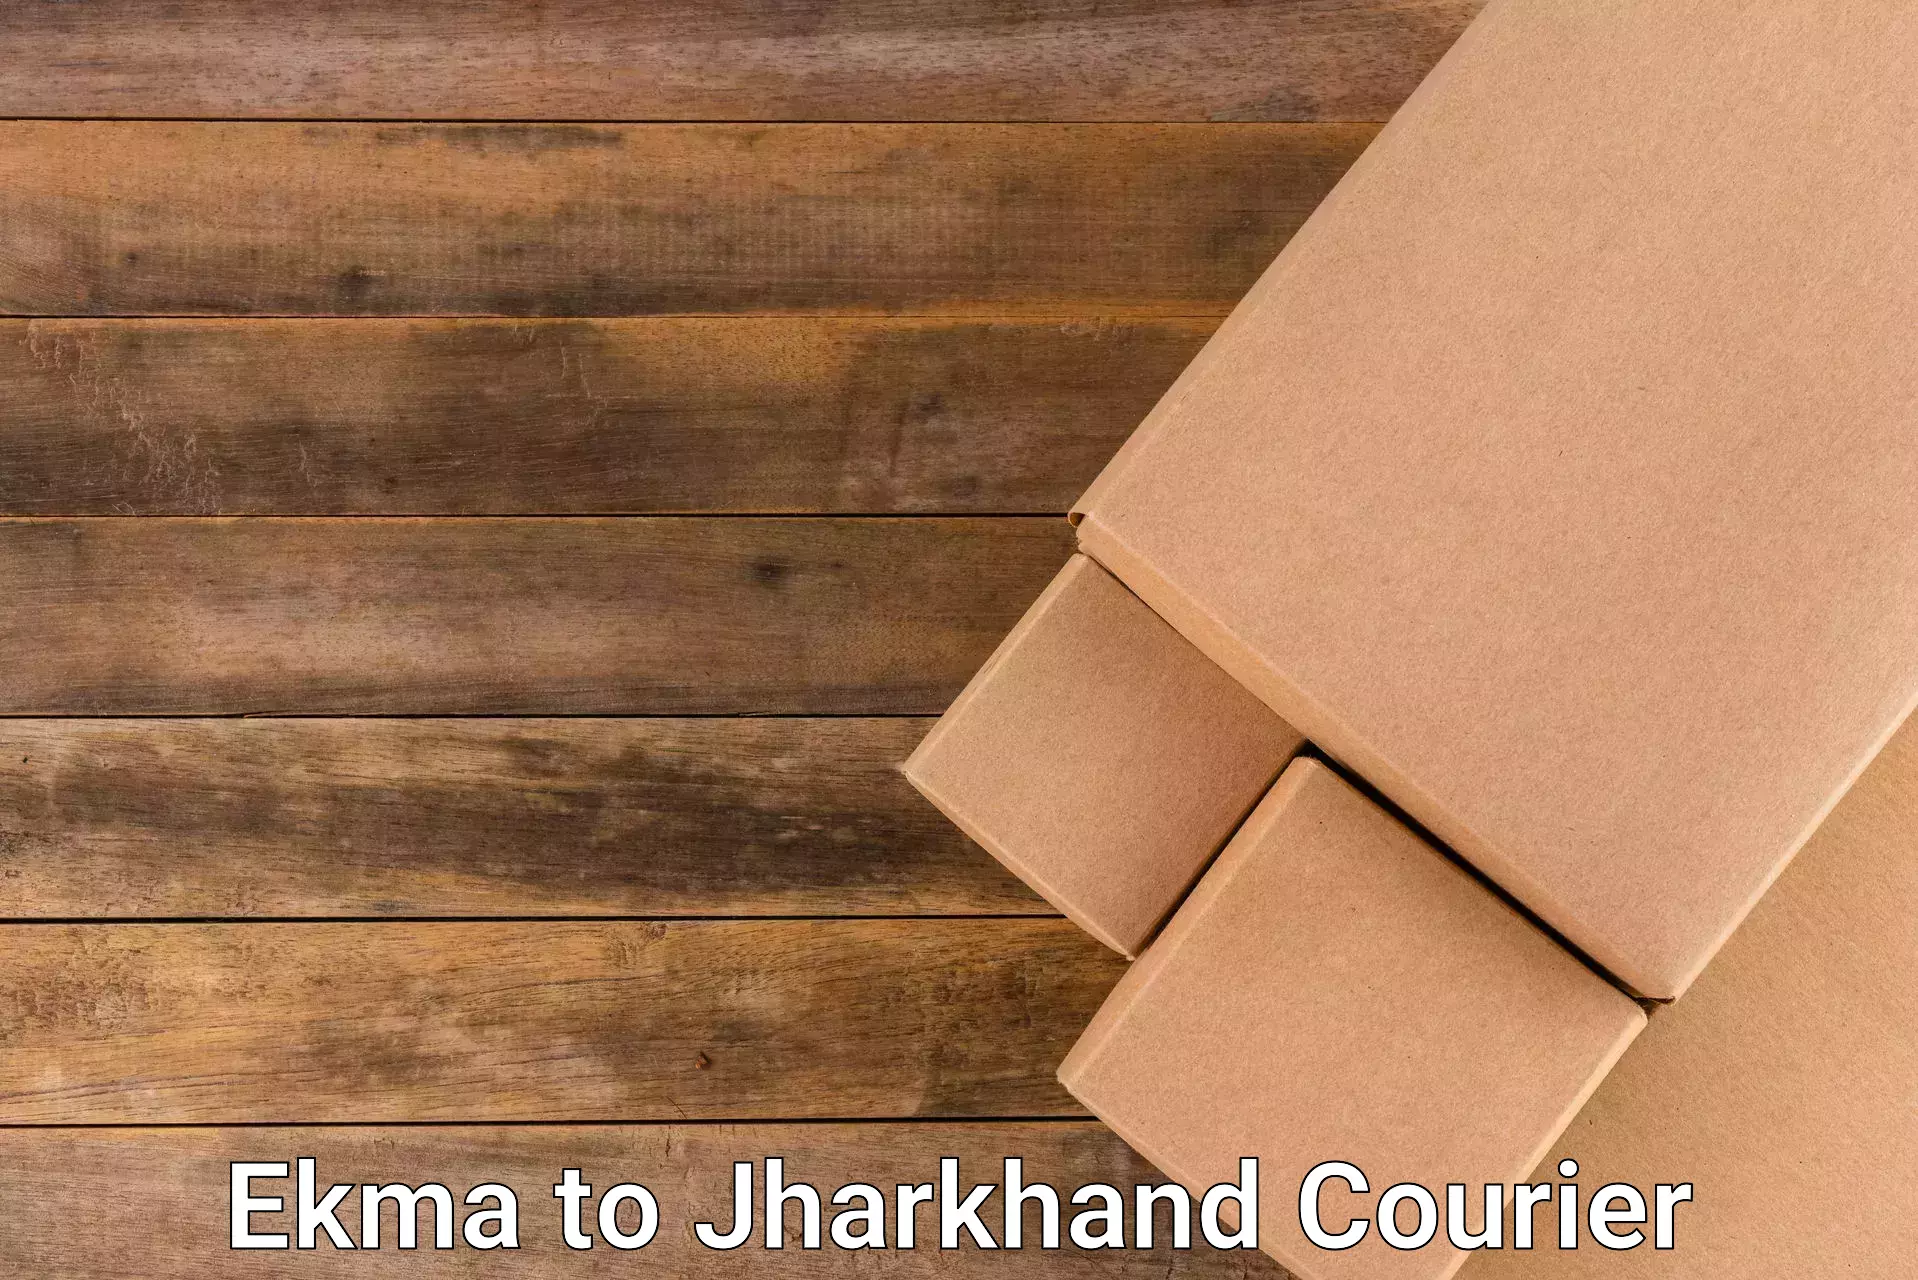 Express package handling Ekma to Jharkhand